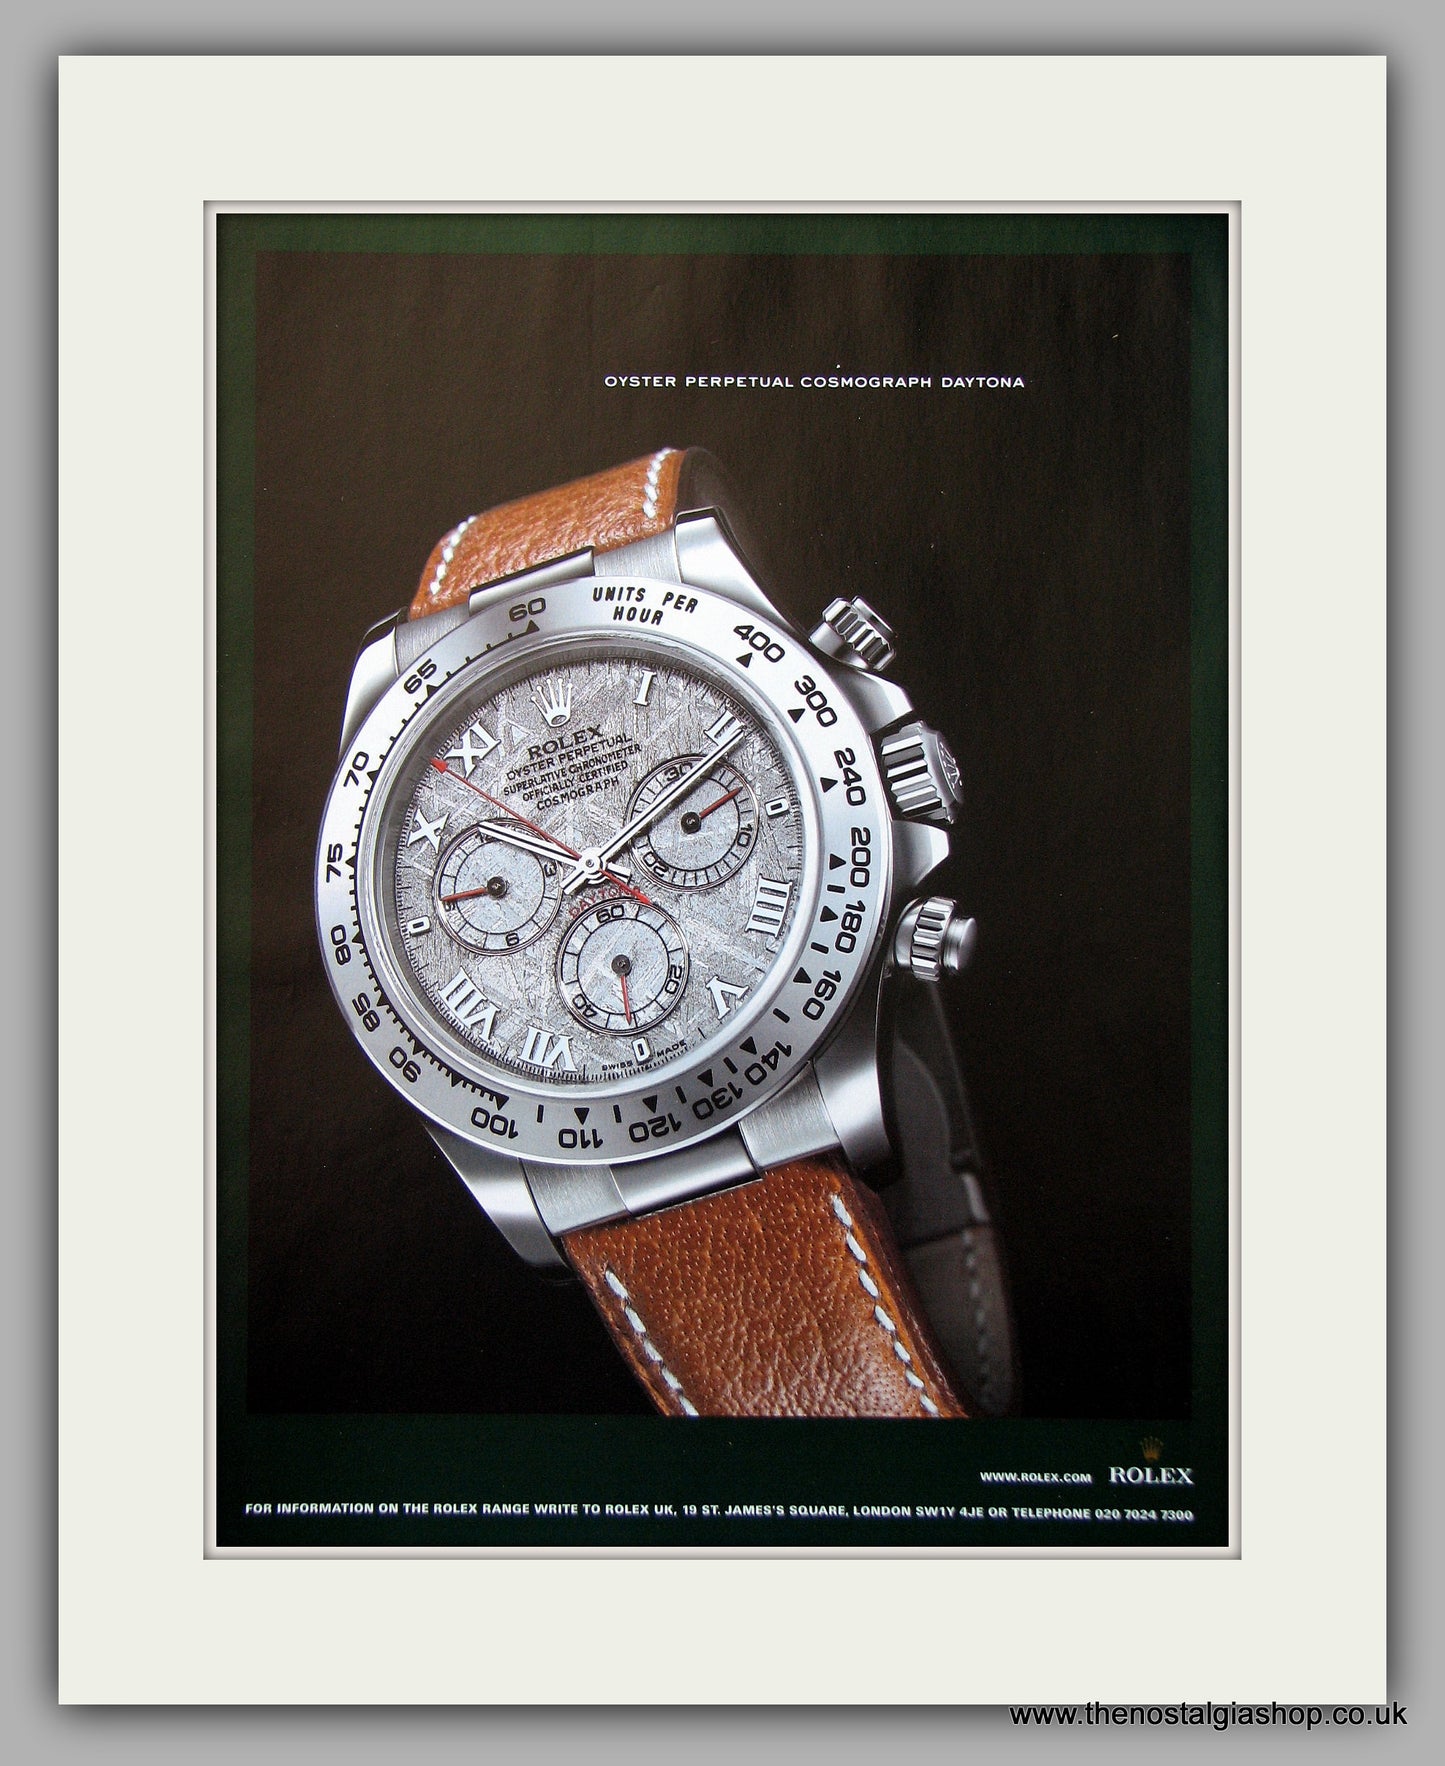 Rolex Oyster Perpetual Cosmograph Daytona Watch Original Advert 2004 (ref AD6906)